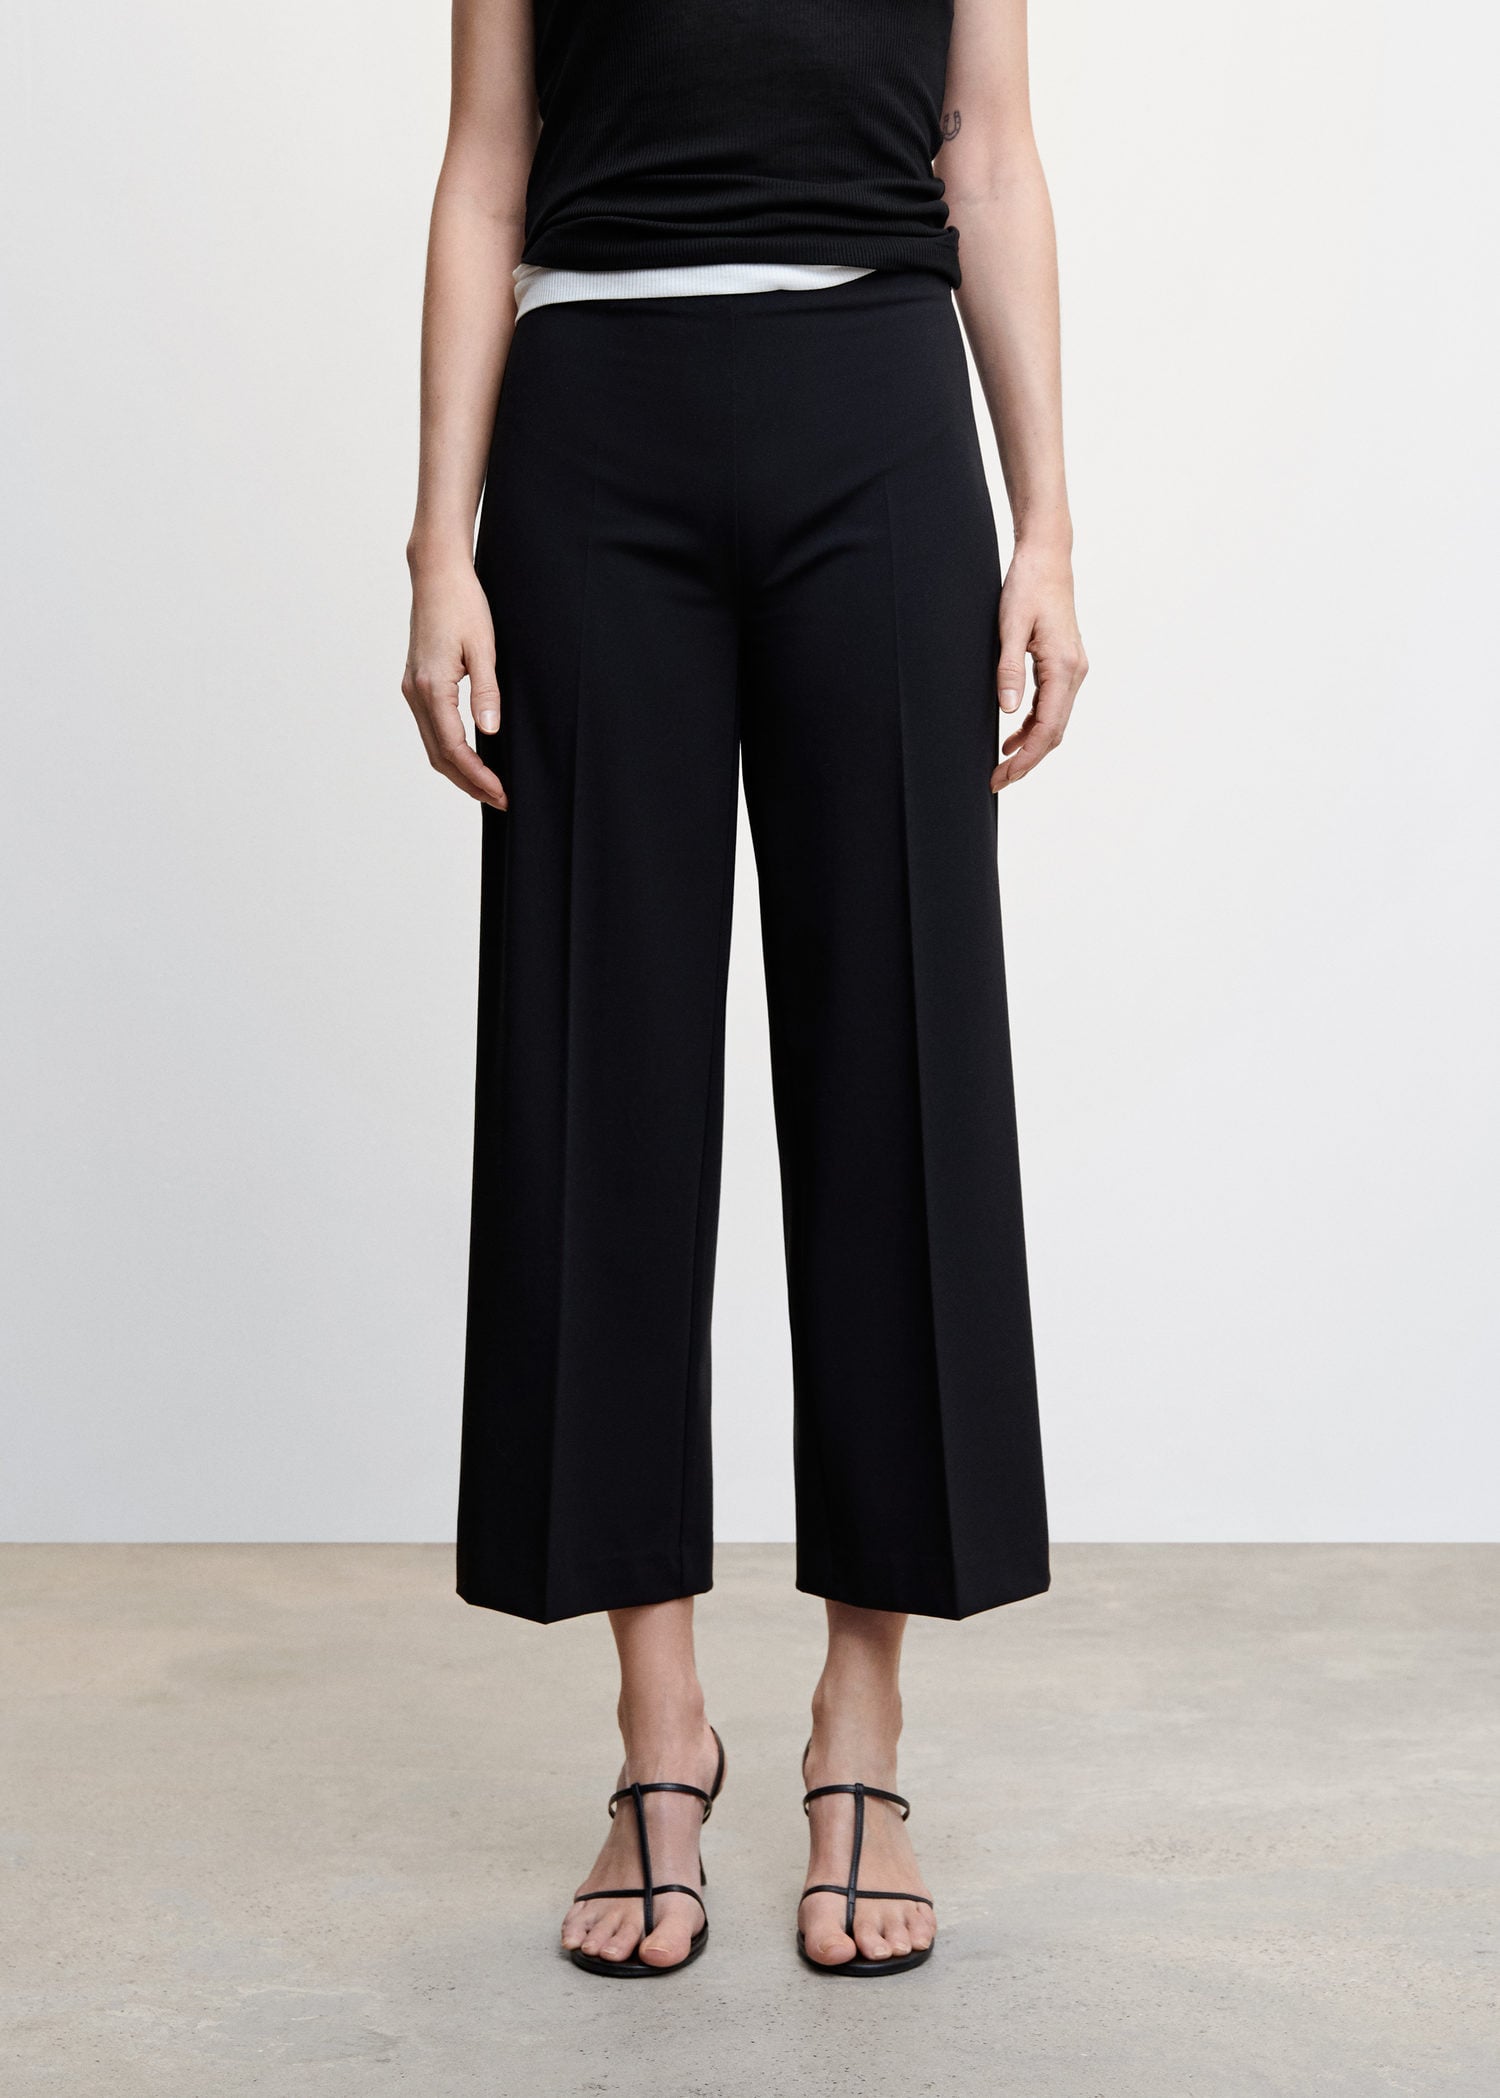 Pantalon style jupe-culotte droit | MANGO